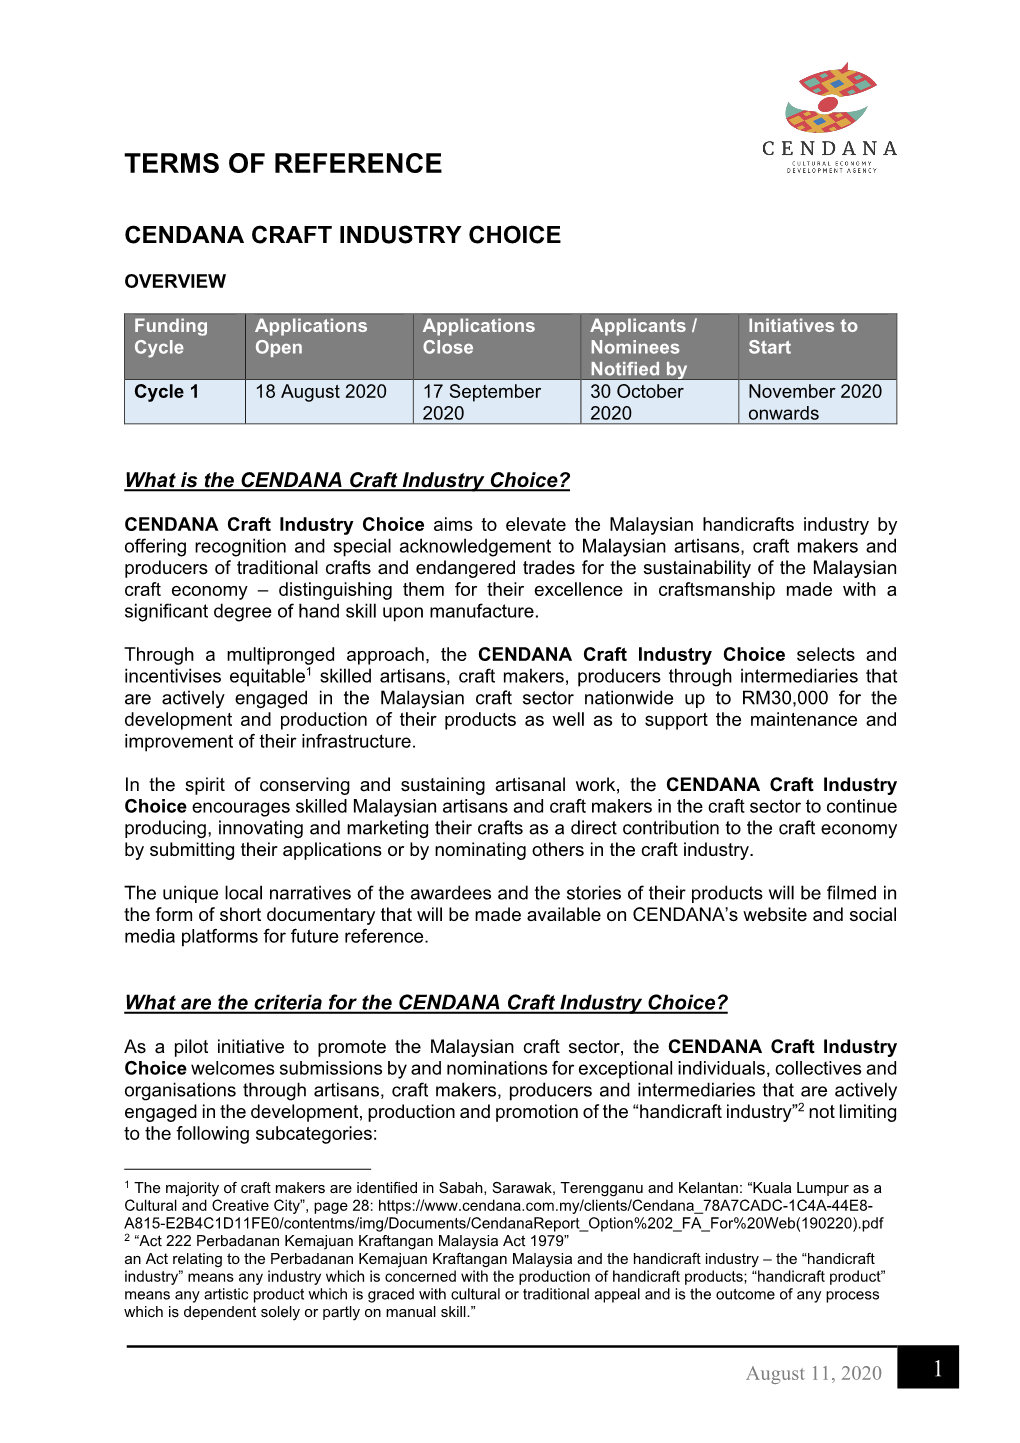 Cendana Craft Industry Choice